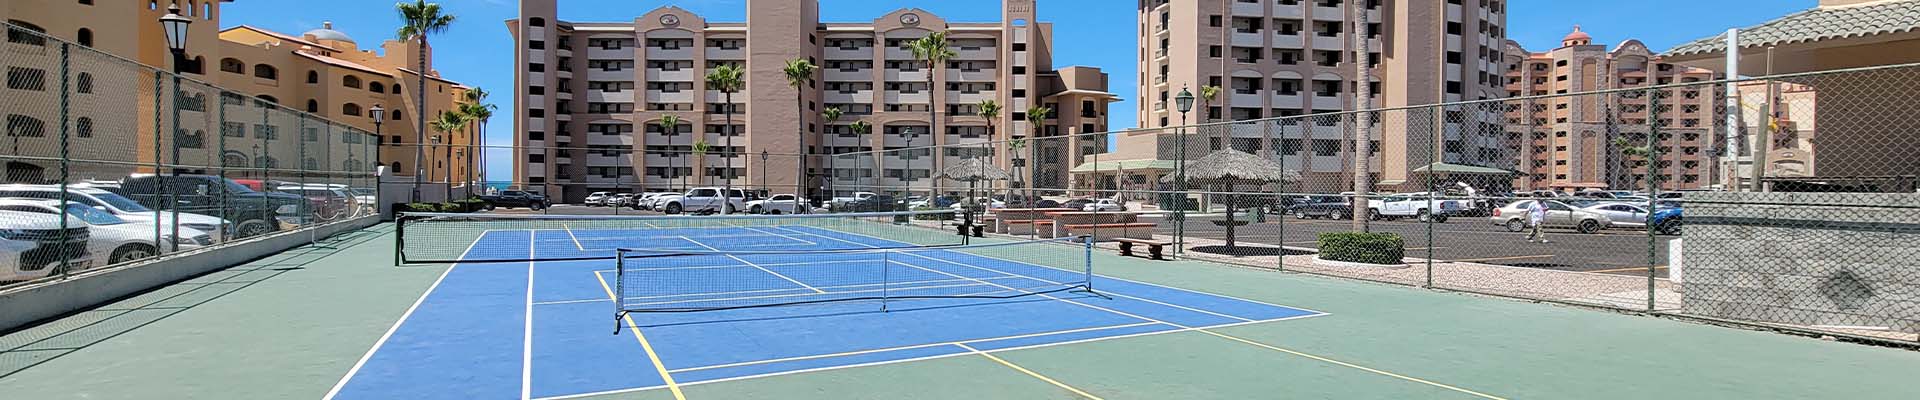 Sonoran Spa Tennis Court, Rocky Point Puerto Peñasco, Sonora Mexico Arizona USA - Website Banner